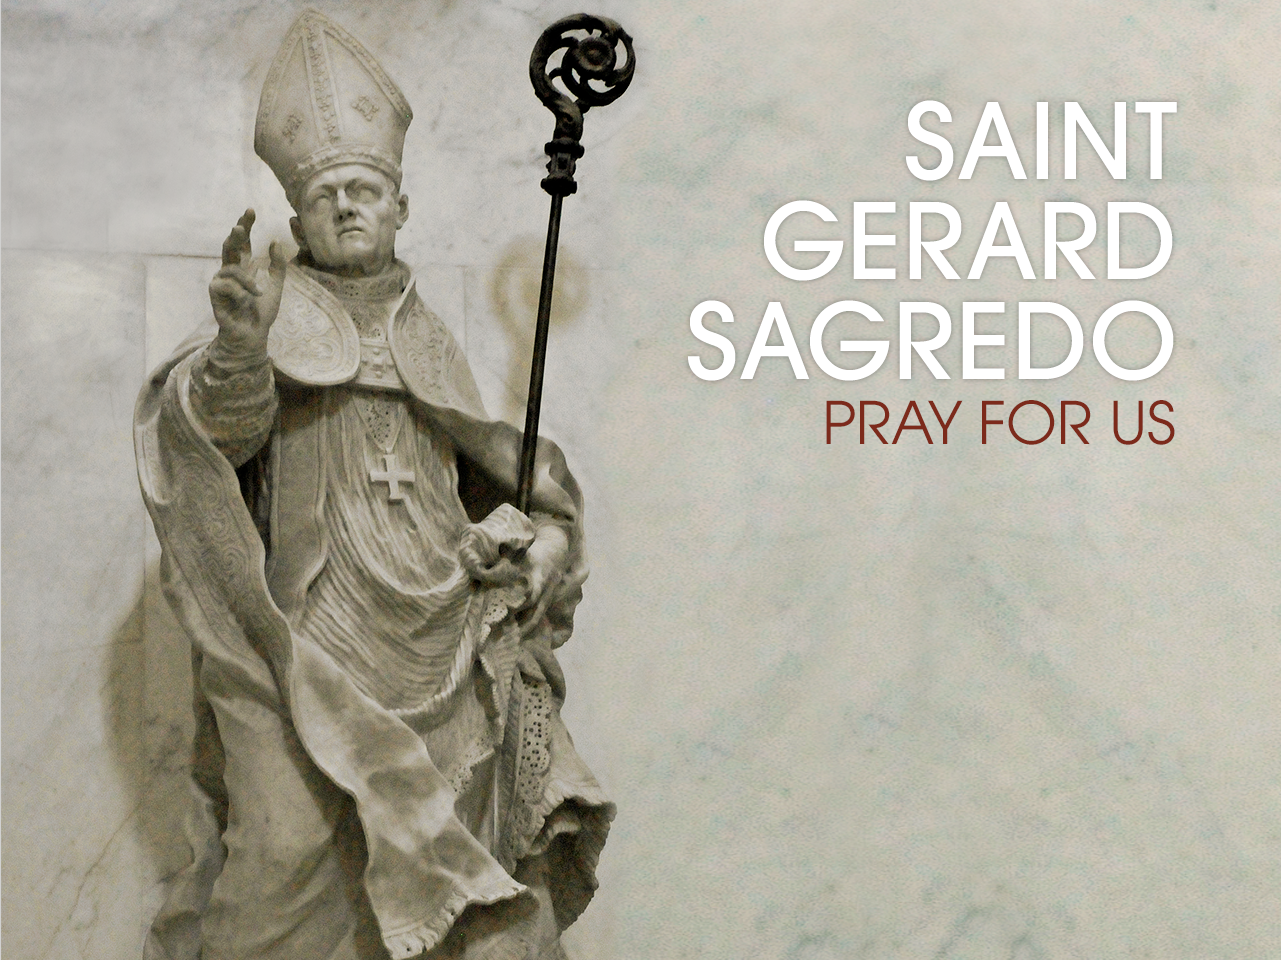 St. Gerard Sagredo